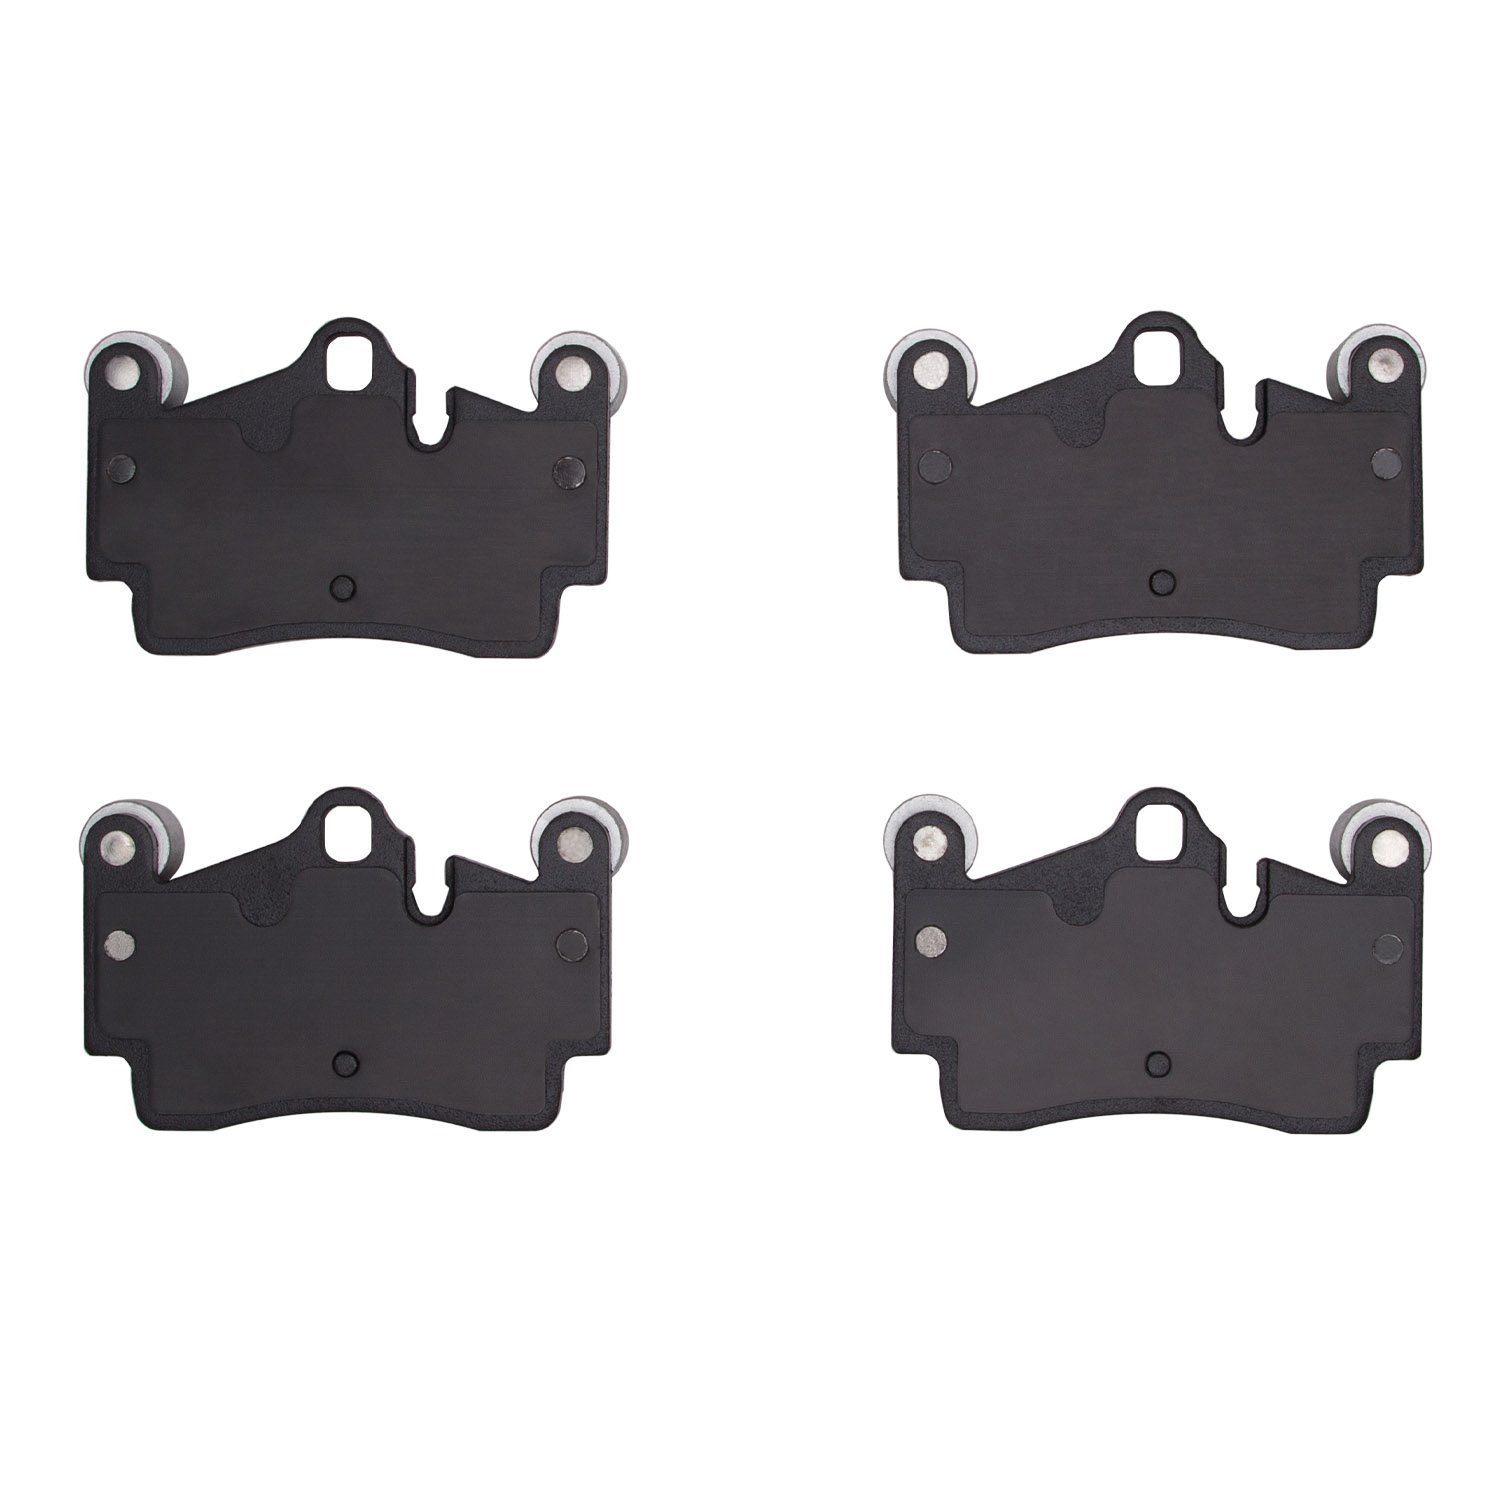 1552-0978-00 5000 Advanced Ceramic Brake Pads, 2003-2010 Multiple Makes/Models, Position: Rear